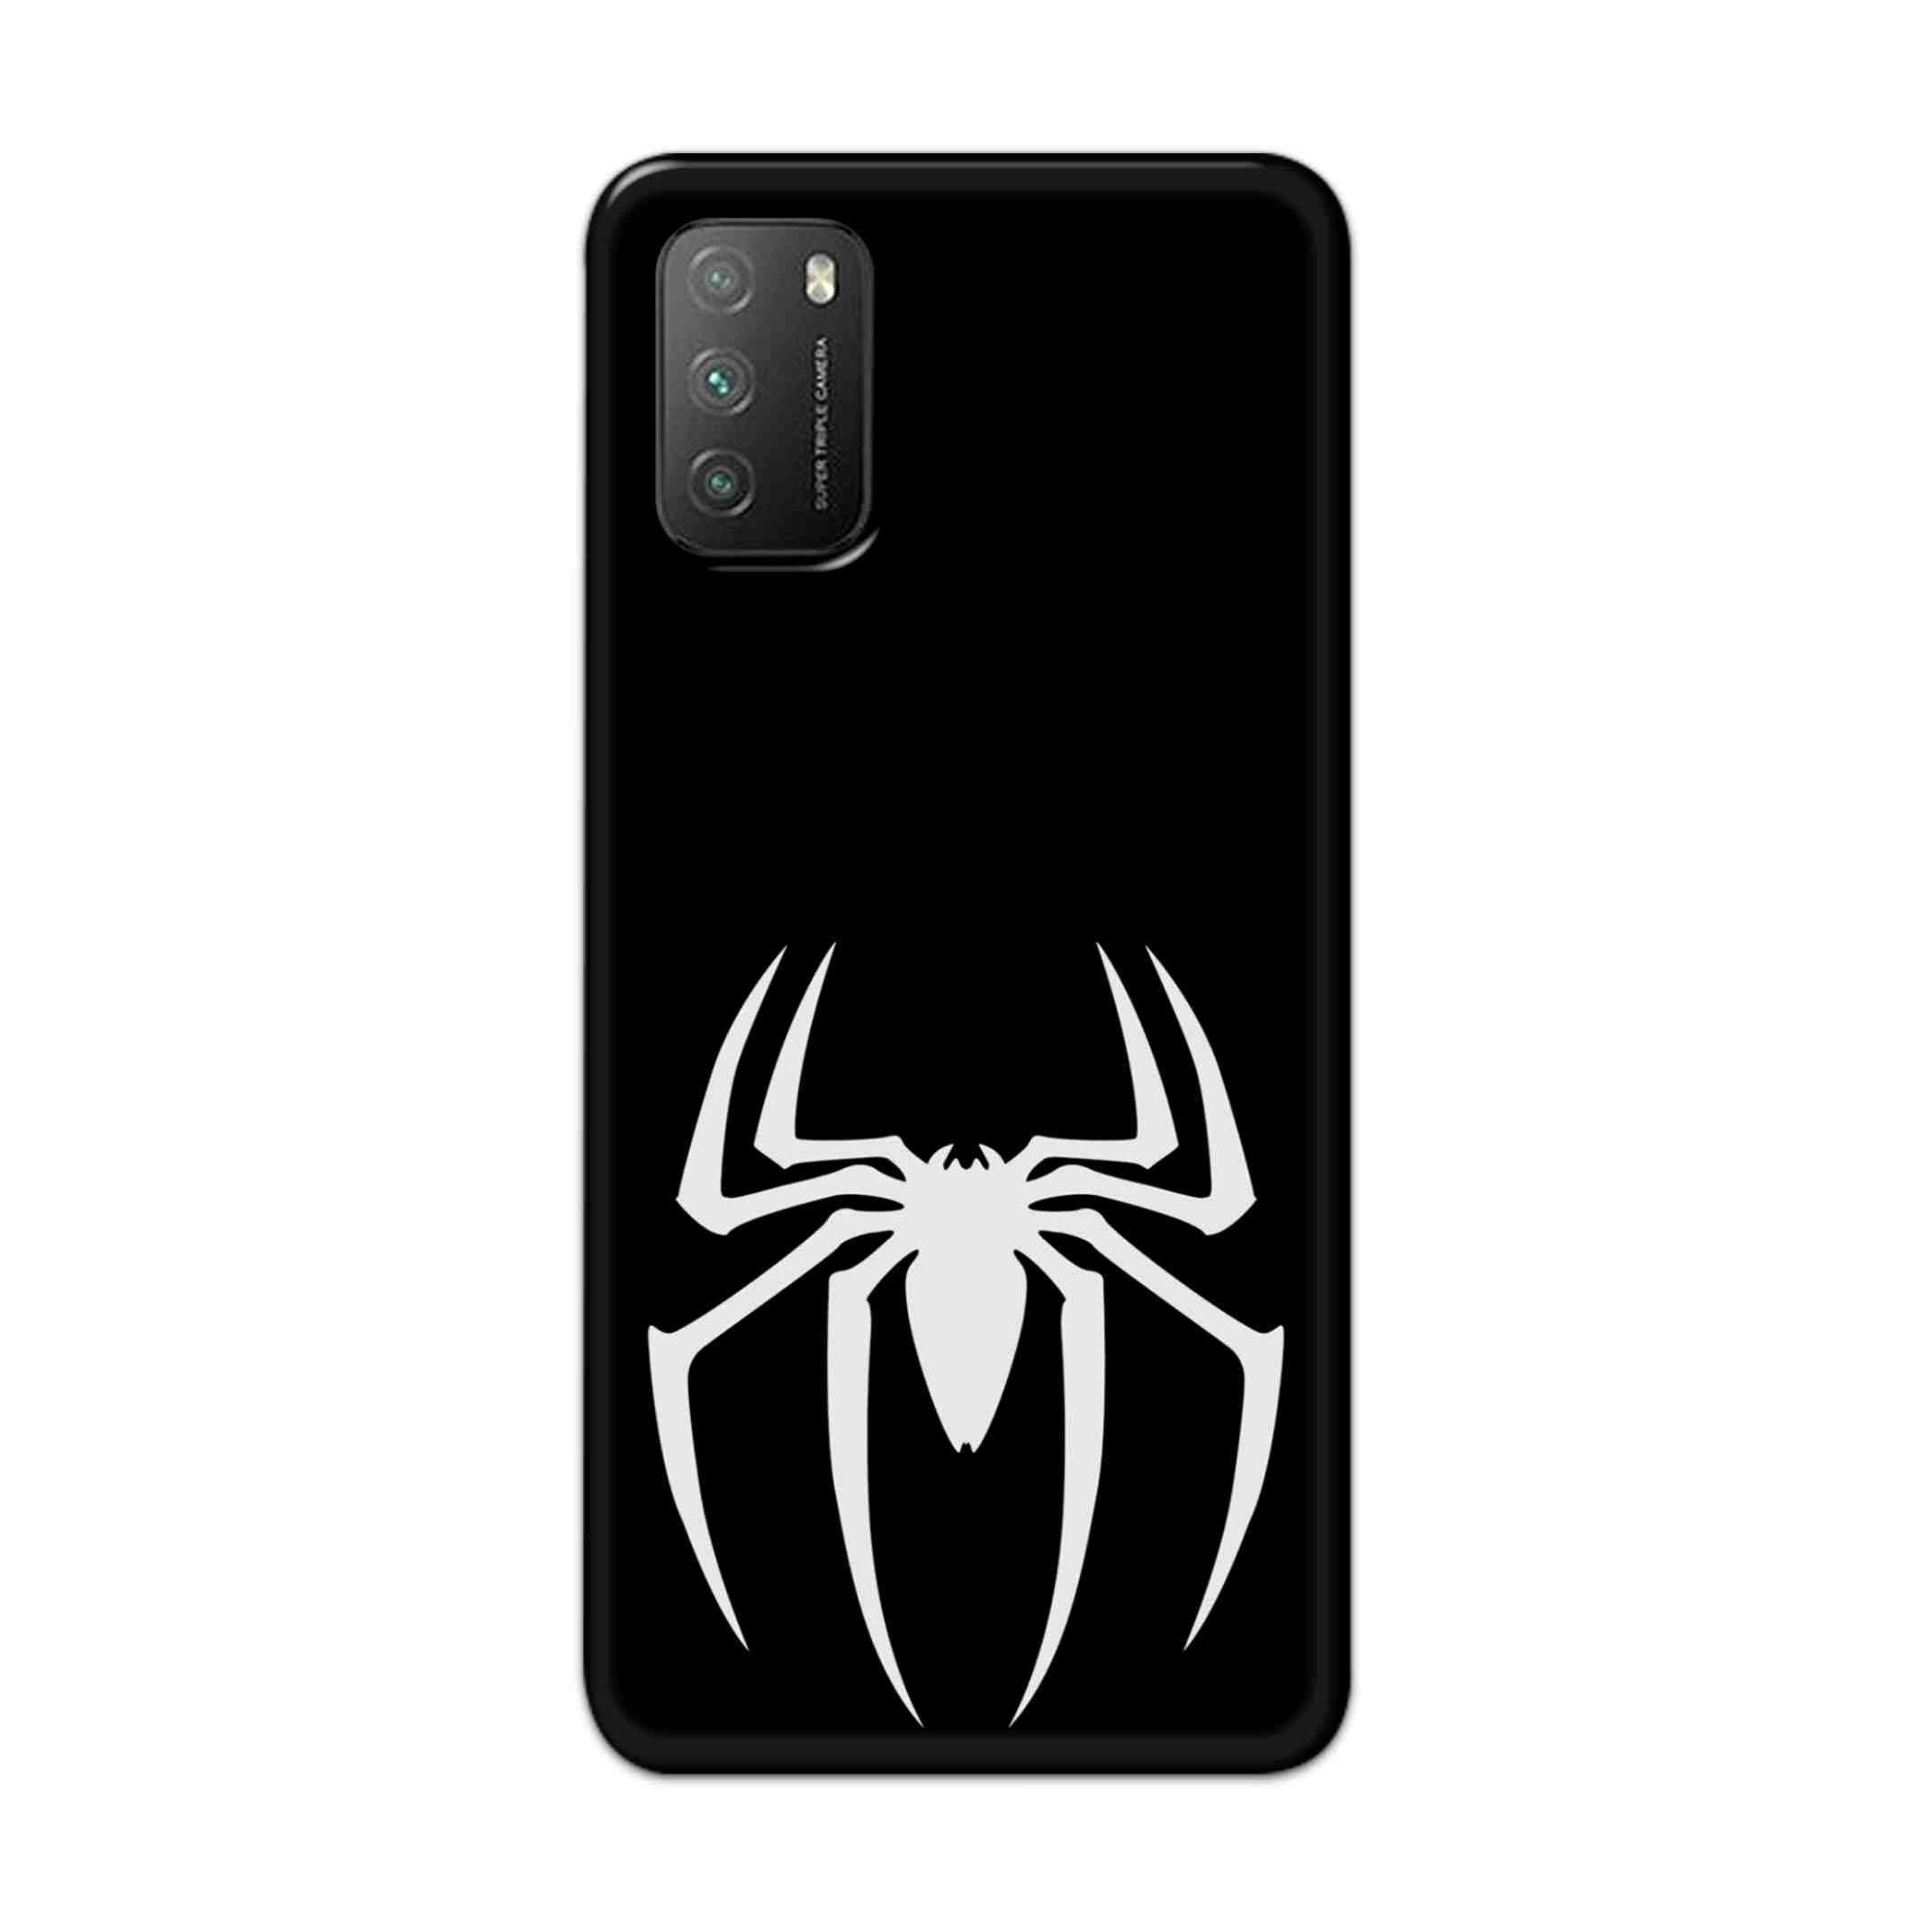 Buy Black Spiderman Logo Hard Back Mobile Phone Case Cover For Poco M3 Online